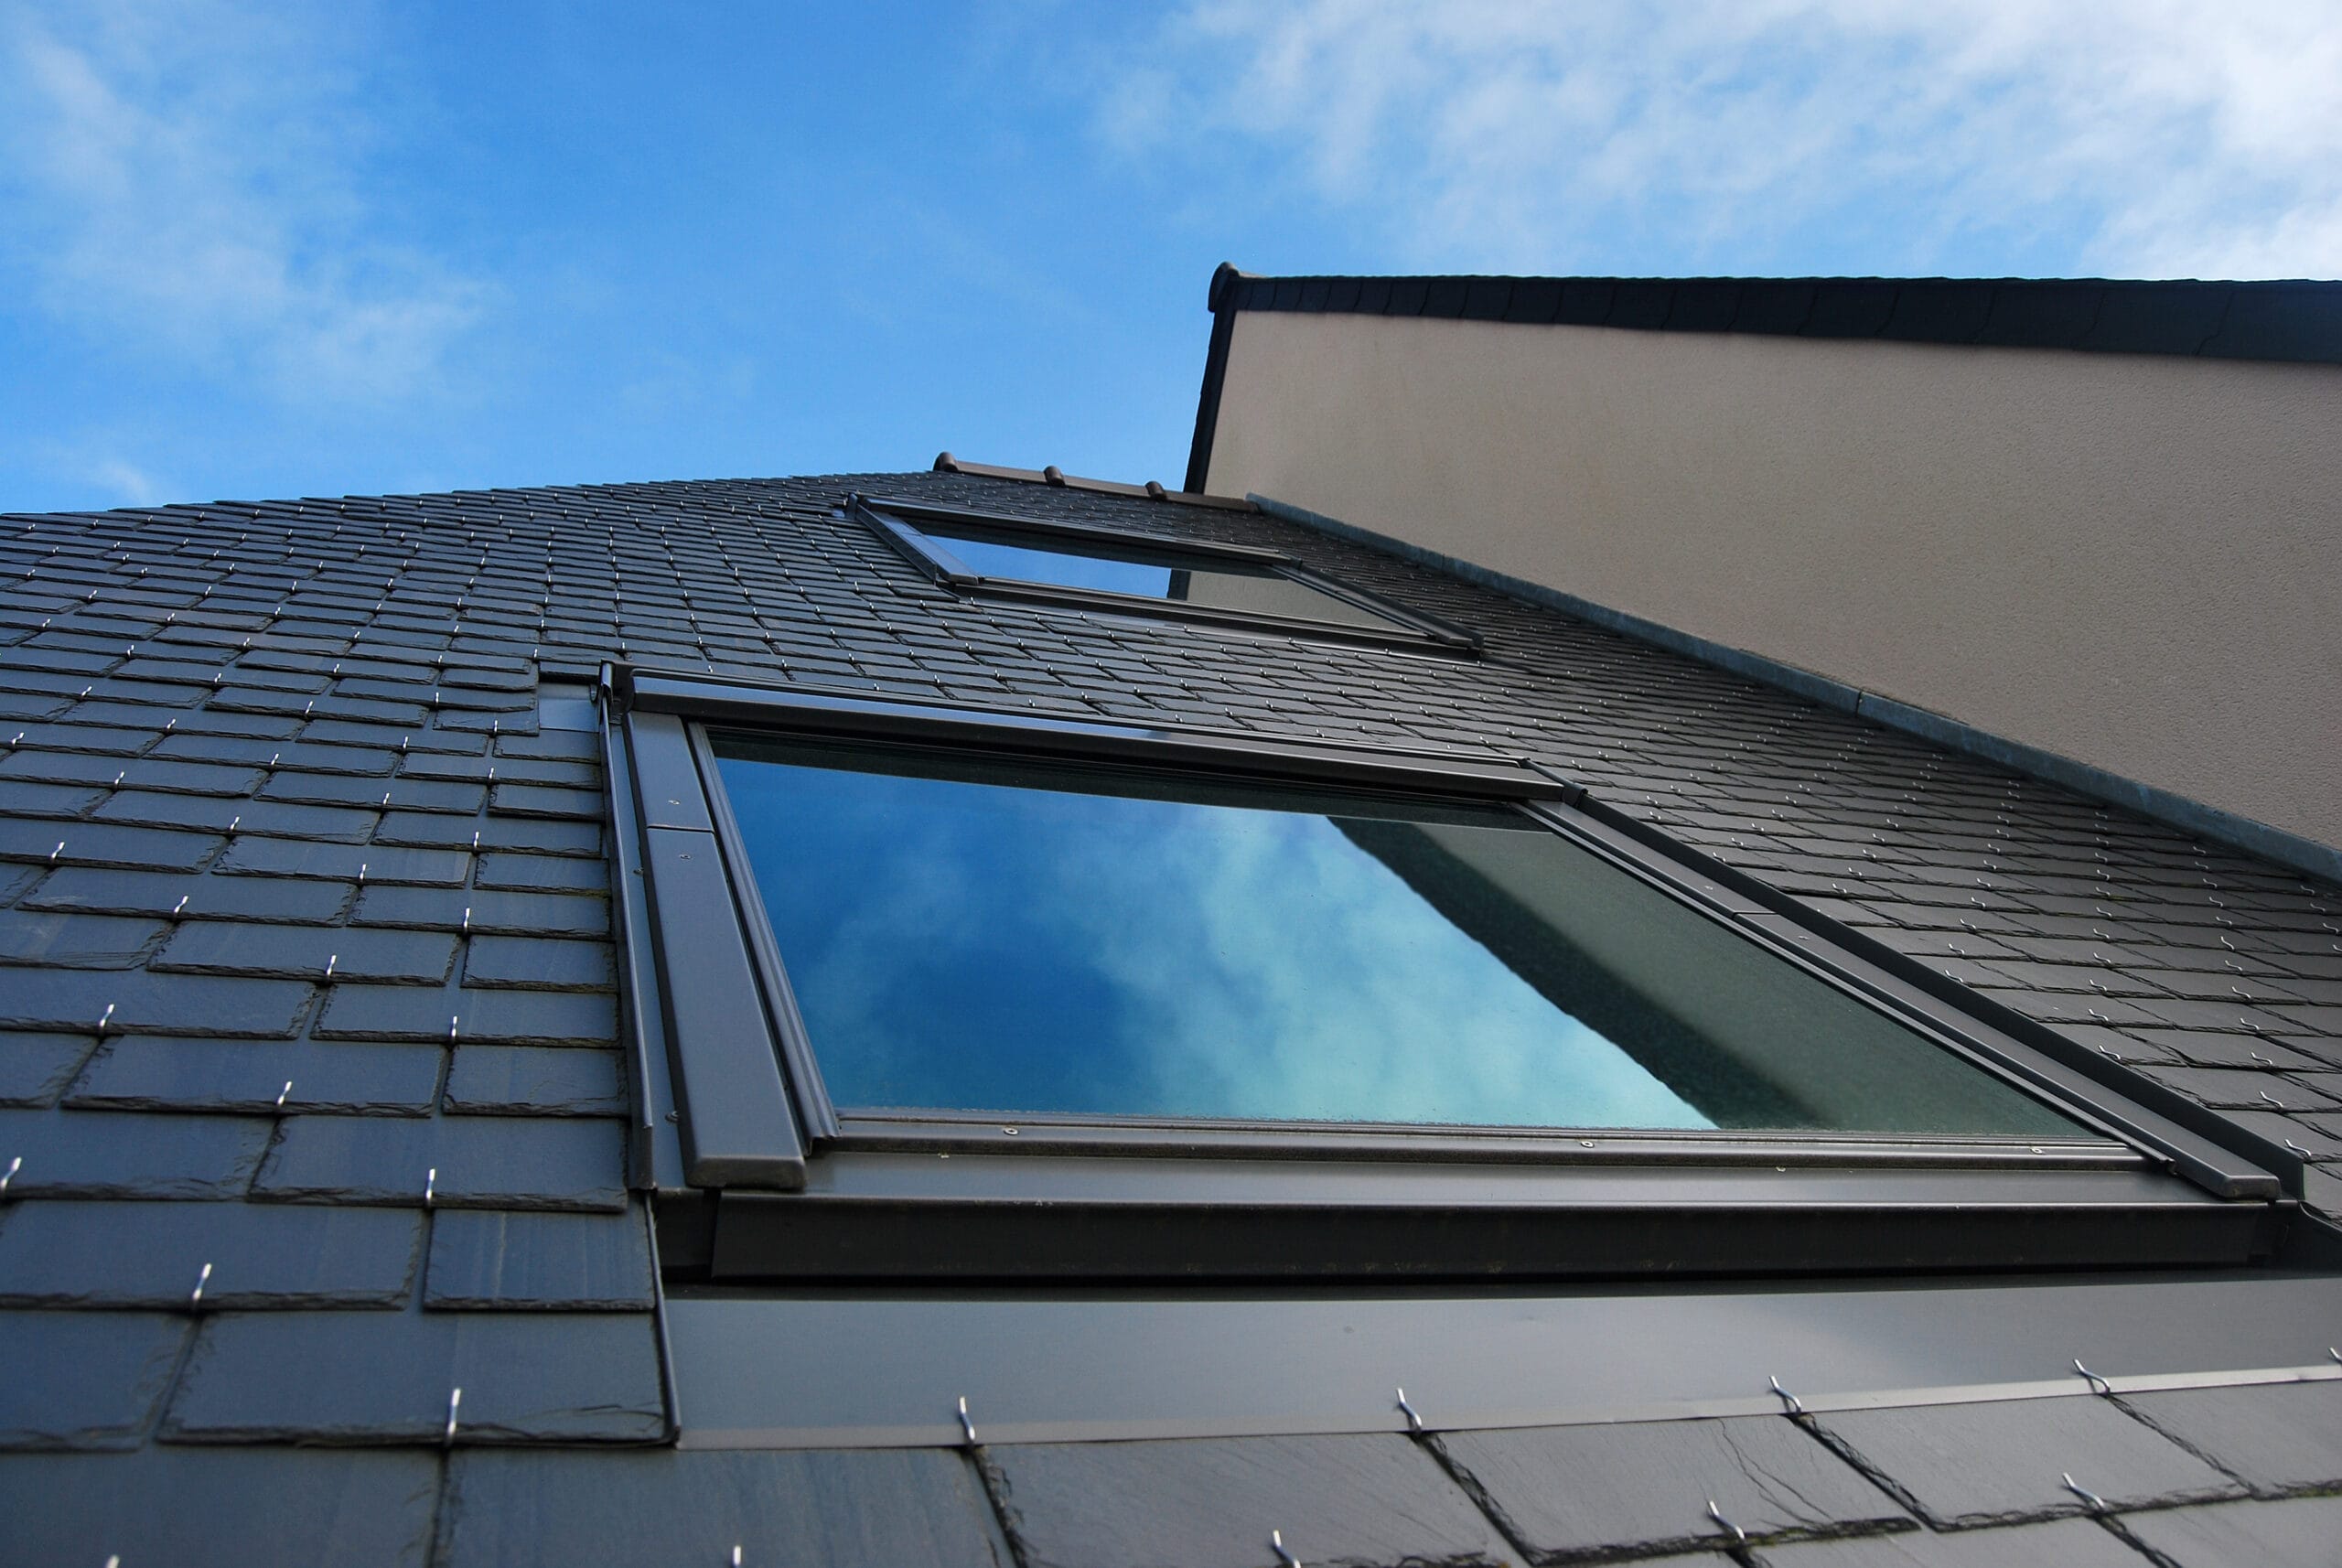 skylight replacement cost, skylight installation cost, Norfolk